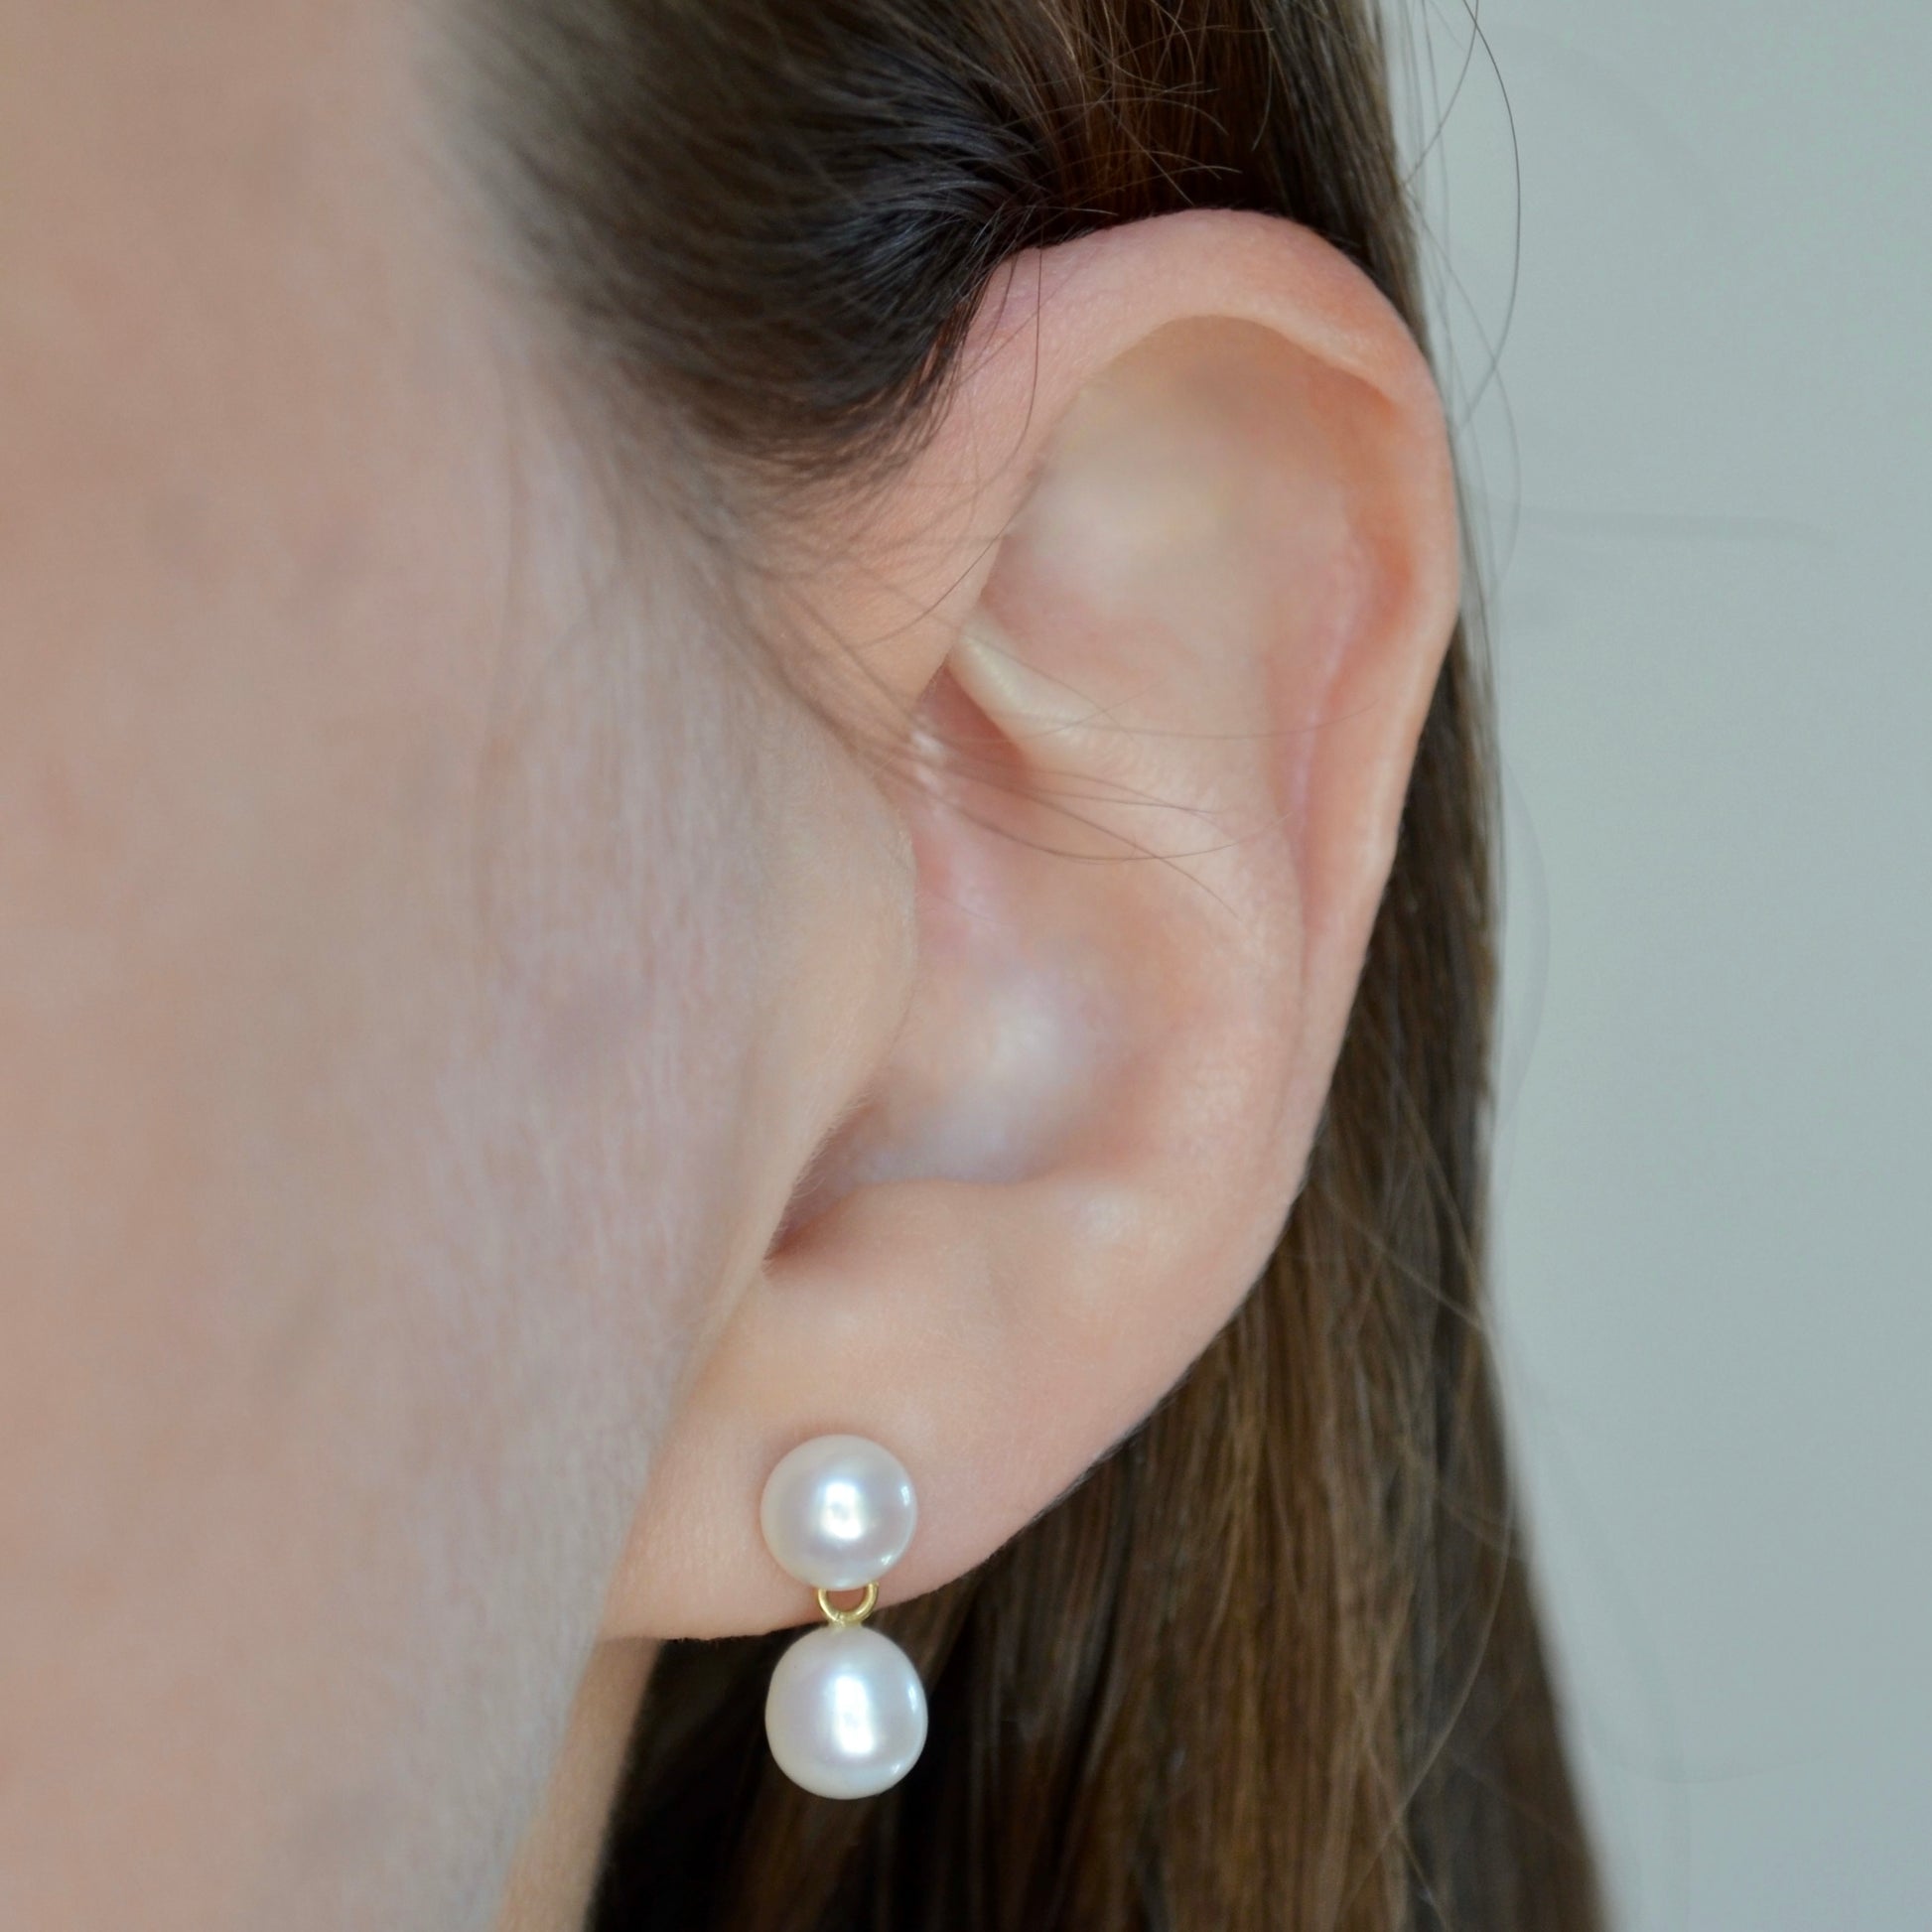 Vintage 14k Pearl and Gold Drop Earrings